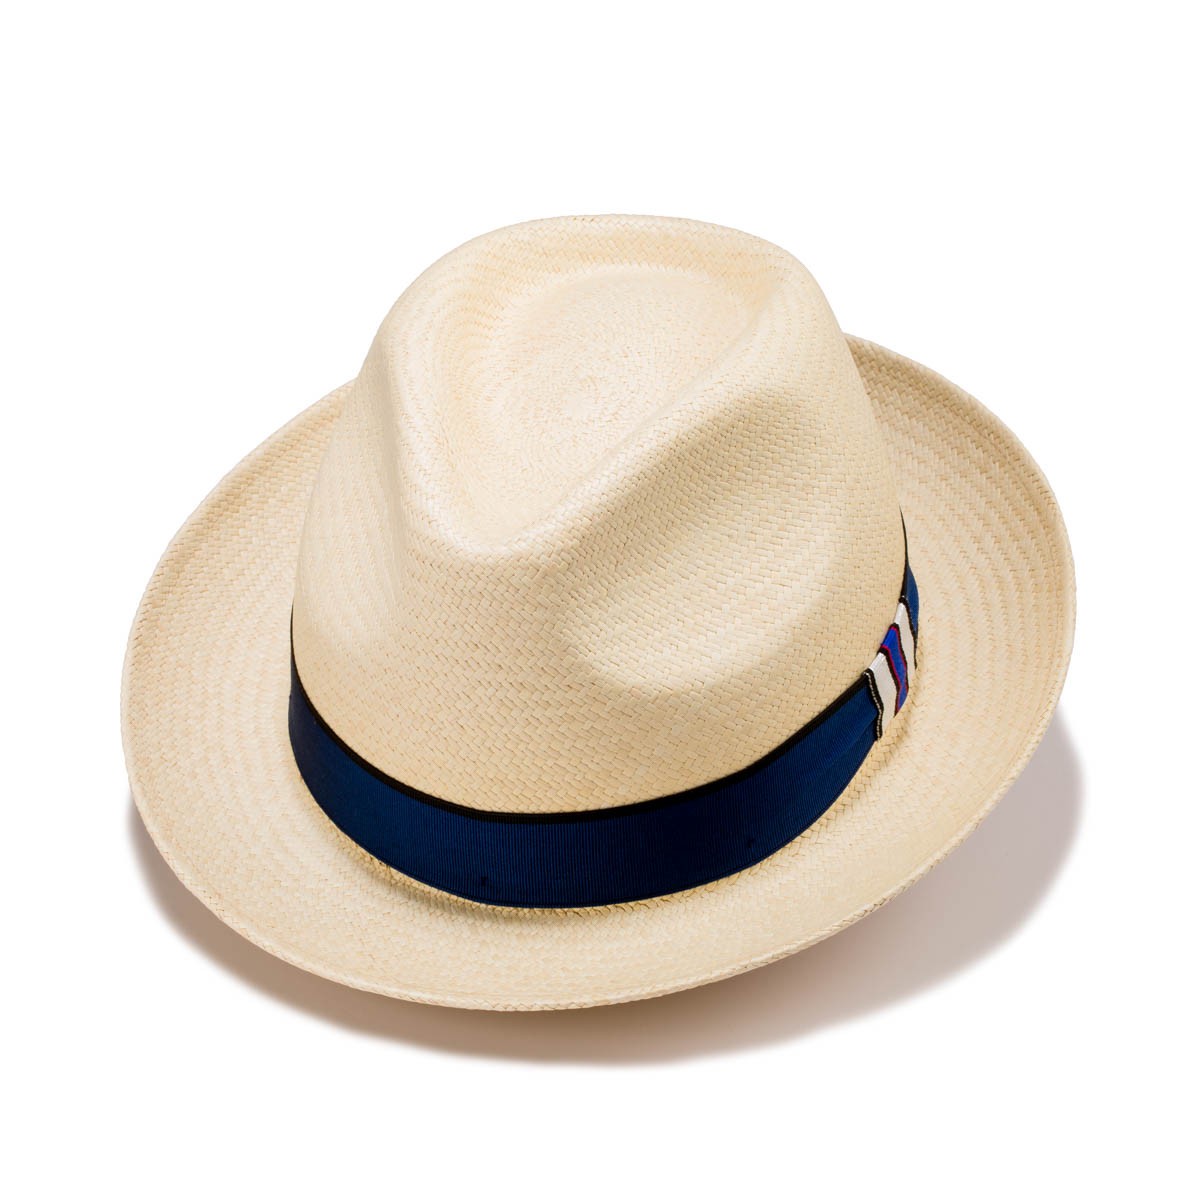 Grosgrain Primavera/Verano Made in The EU de Sol Verano Paja con Banda Grosgrain Mayser Sombrero Panamá Tarbes Hombre 